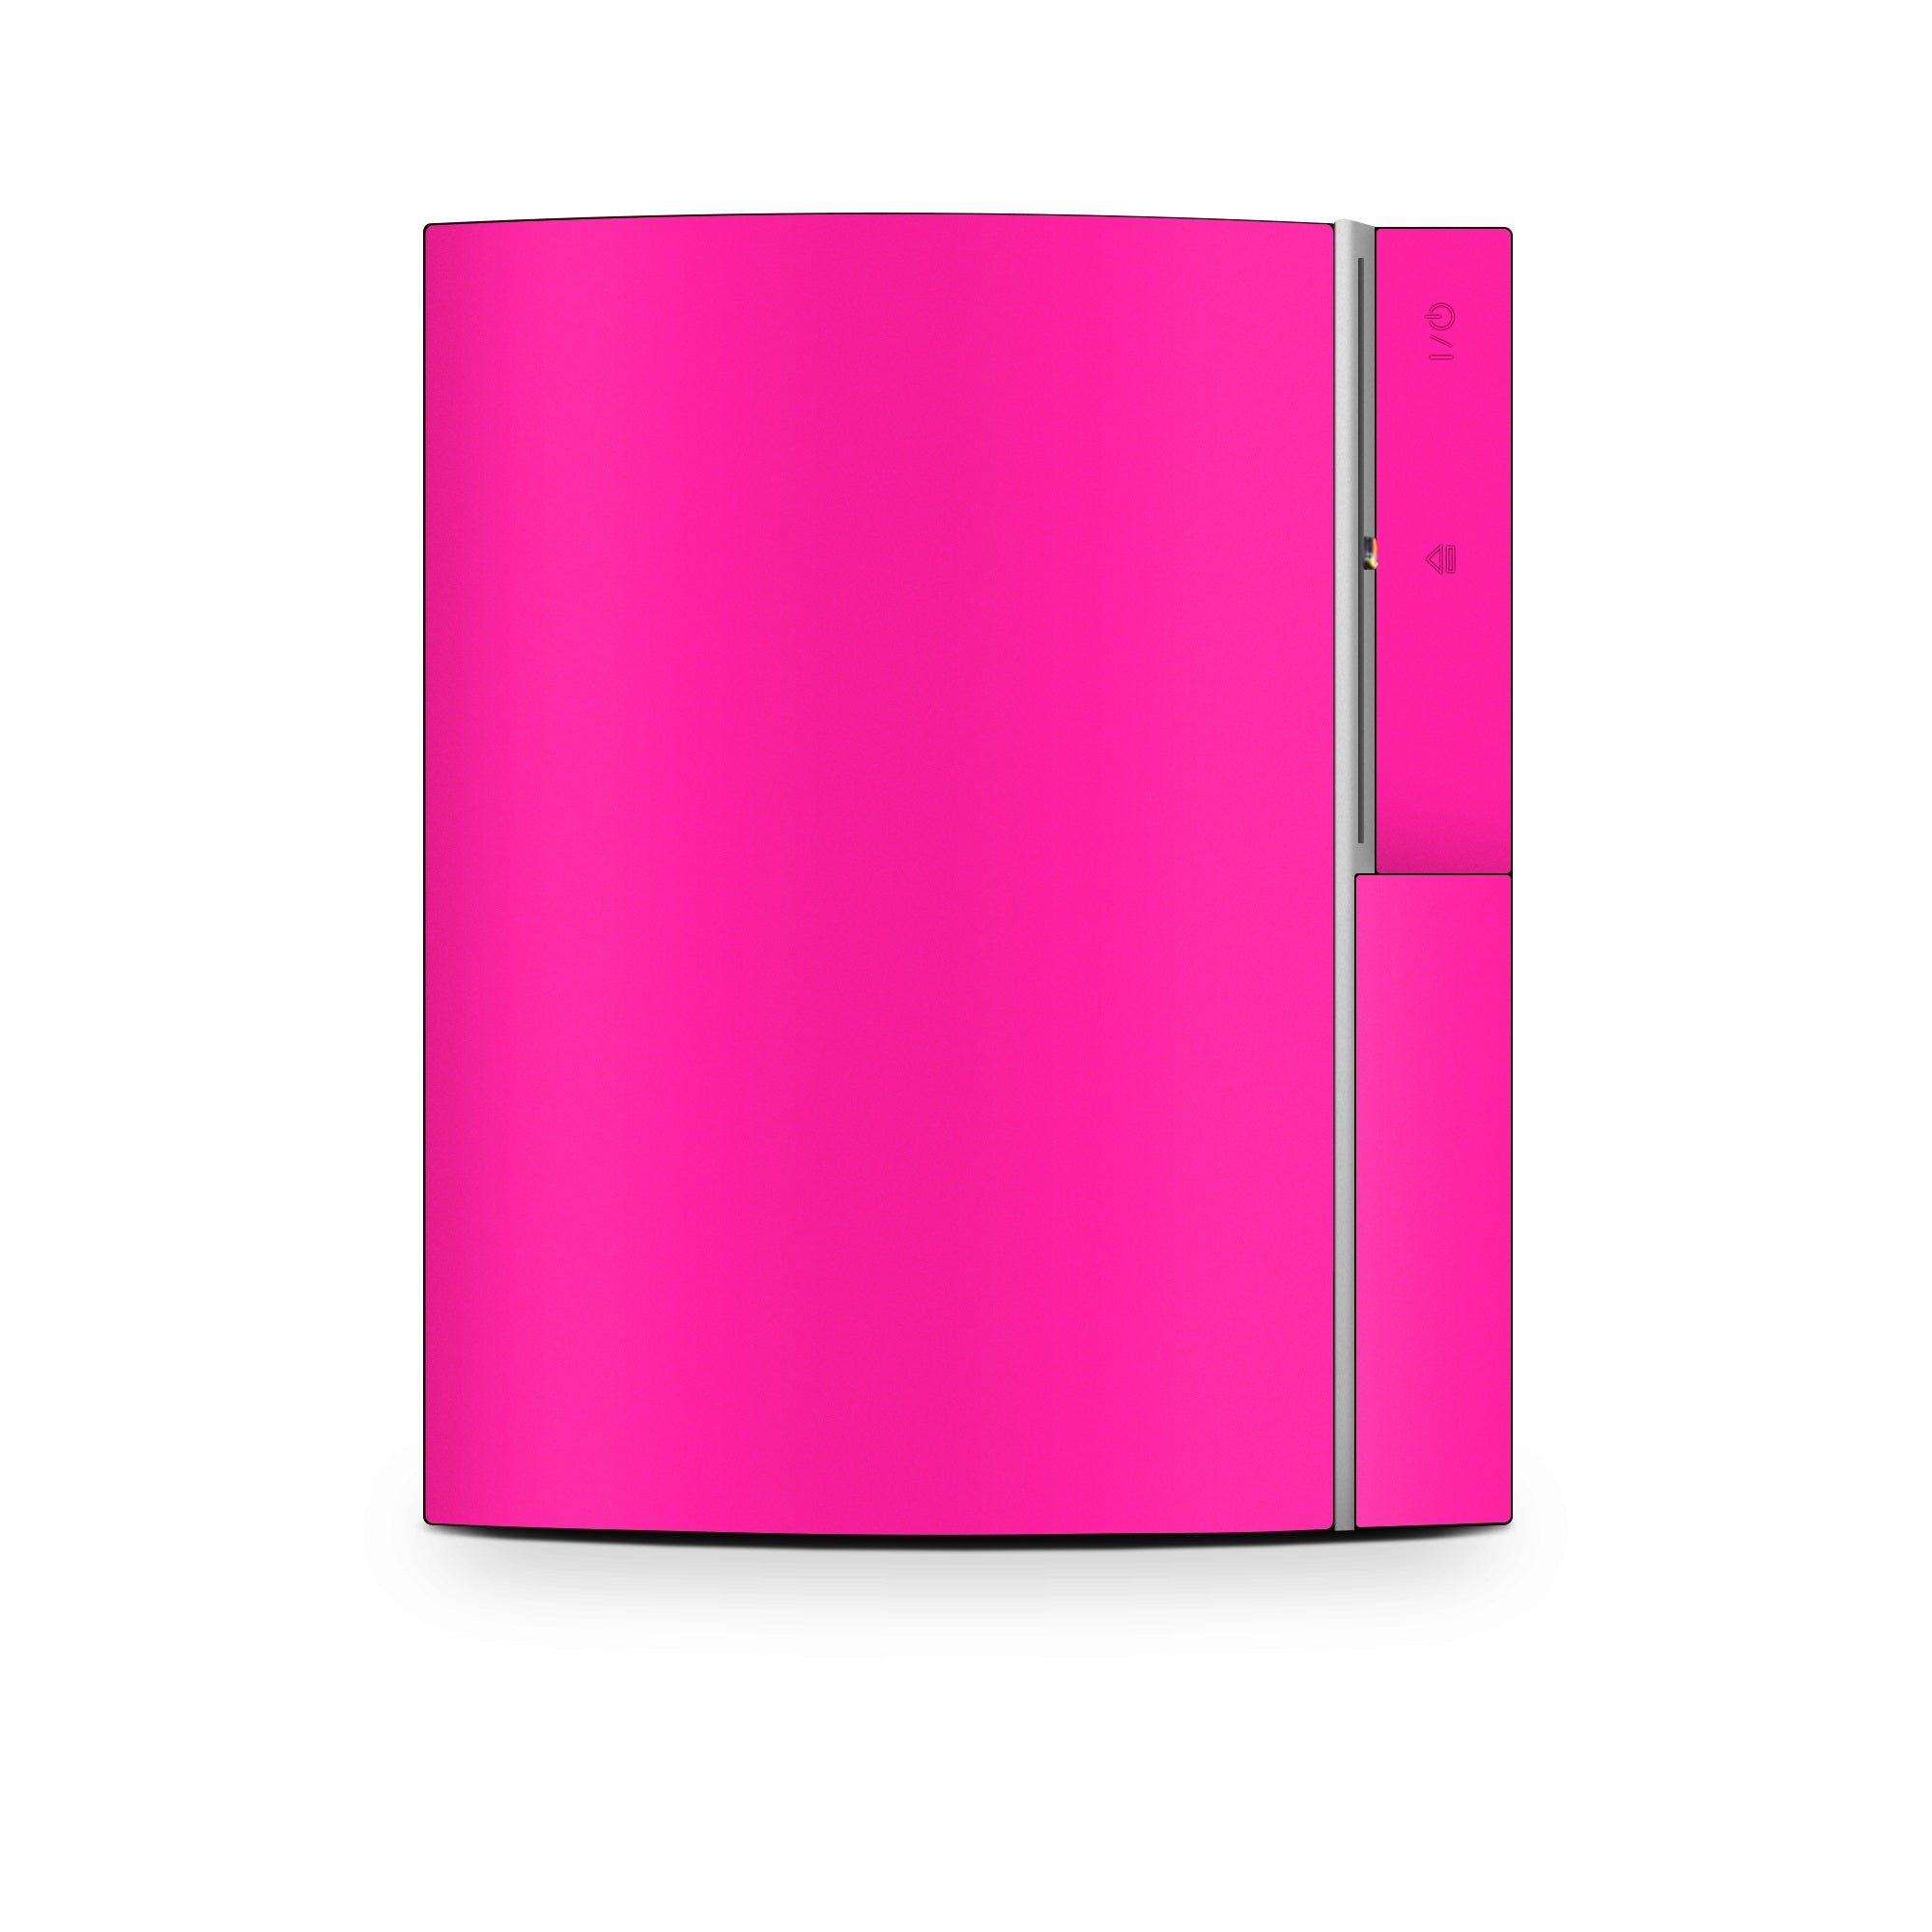 Solid State Malibu Pink - Sony PS3 Skin